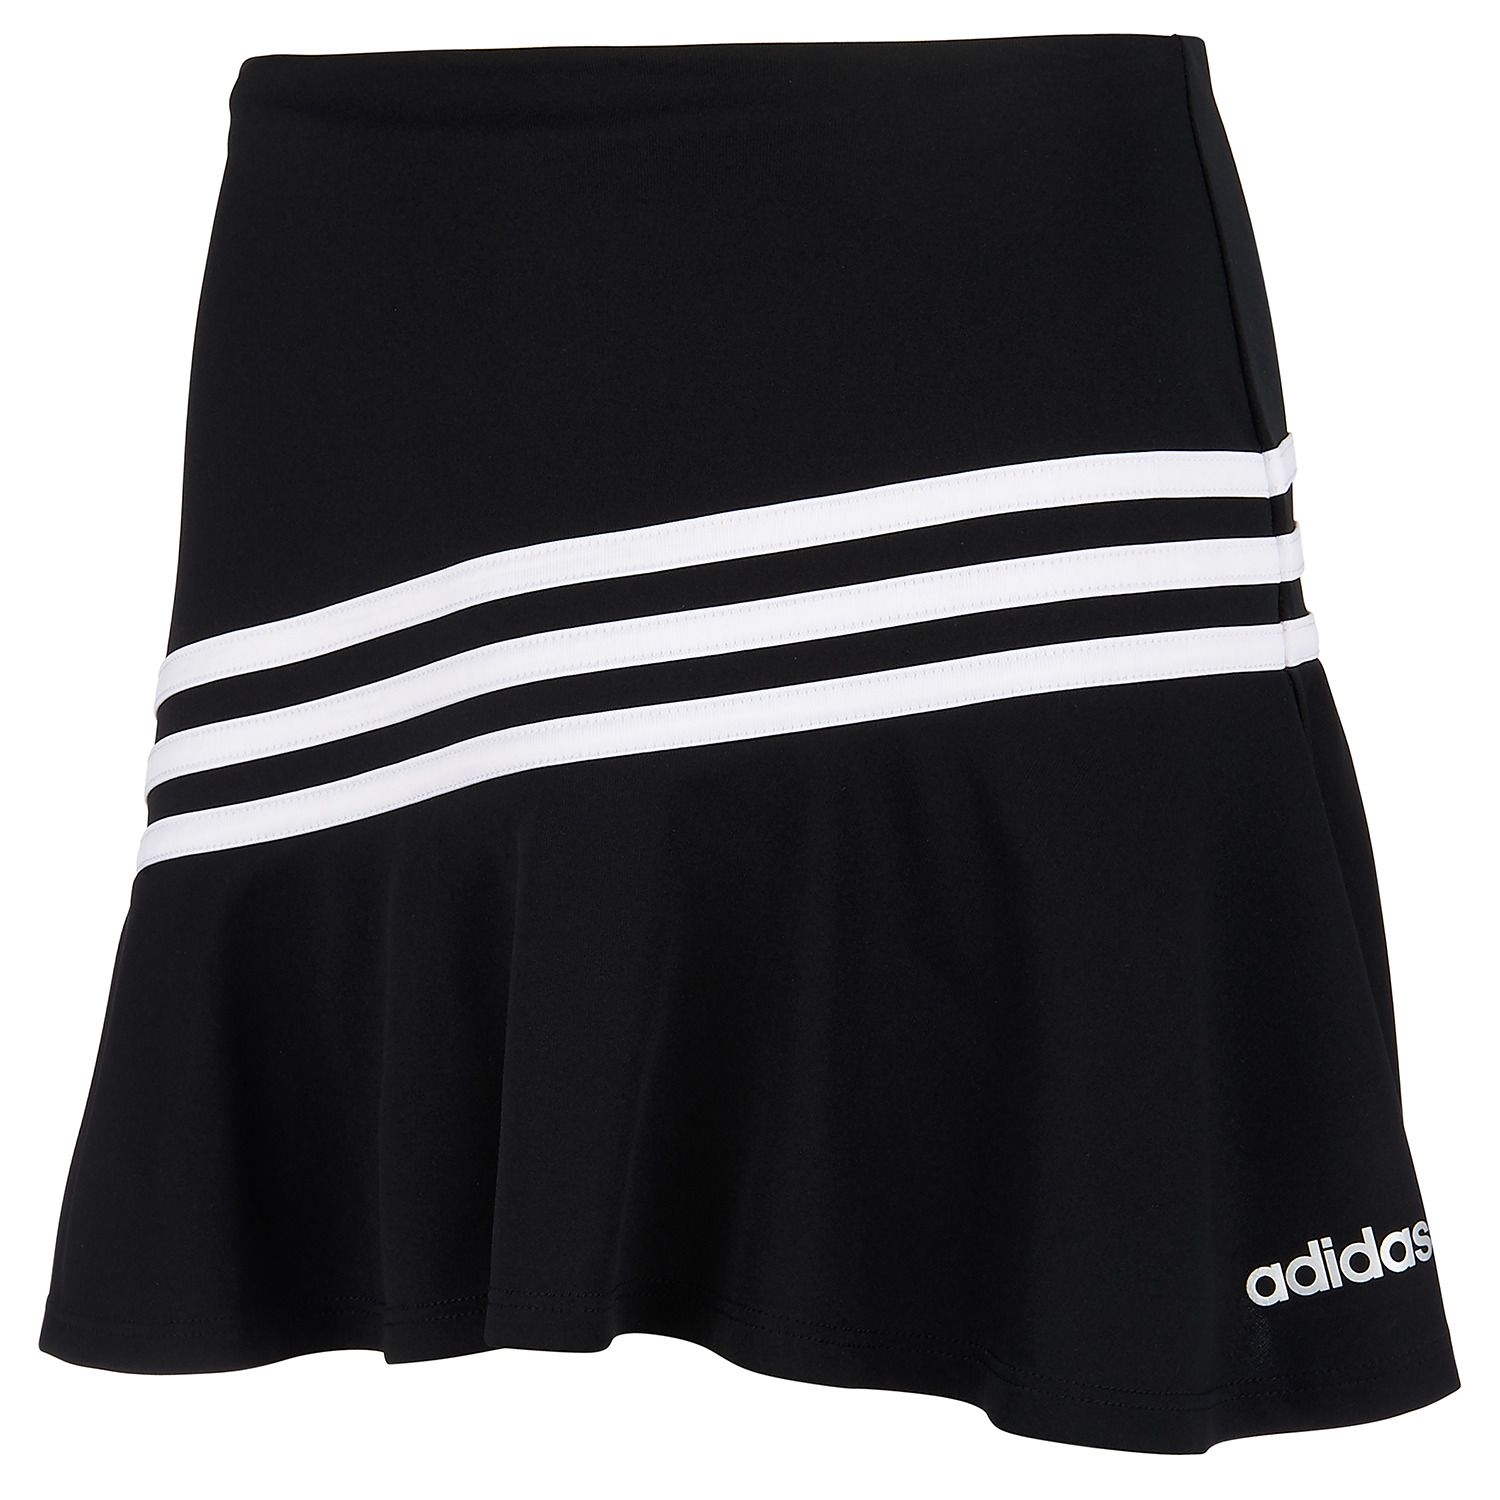 adidas girls skirt